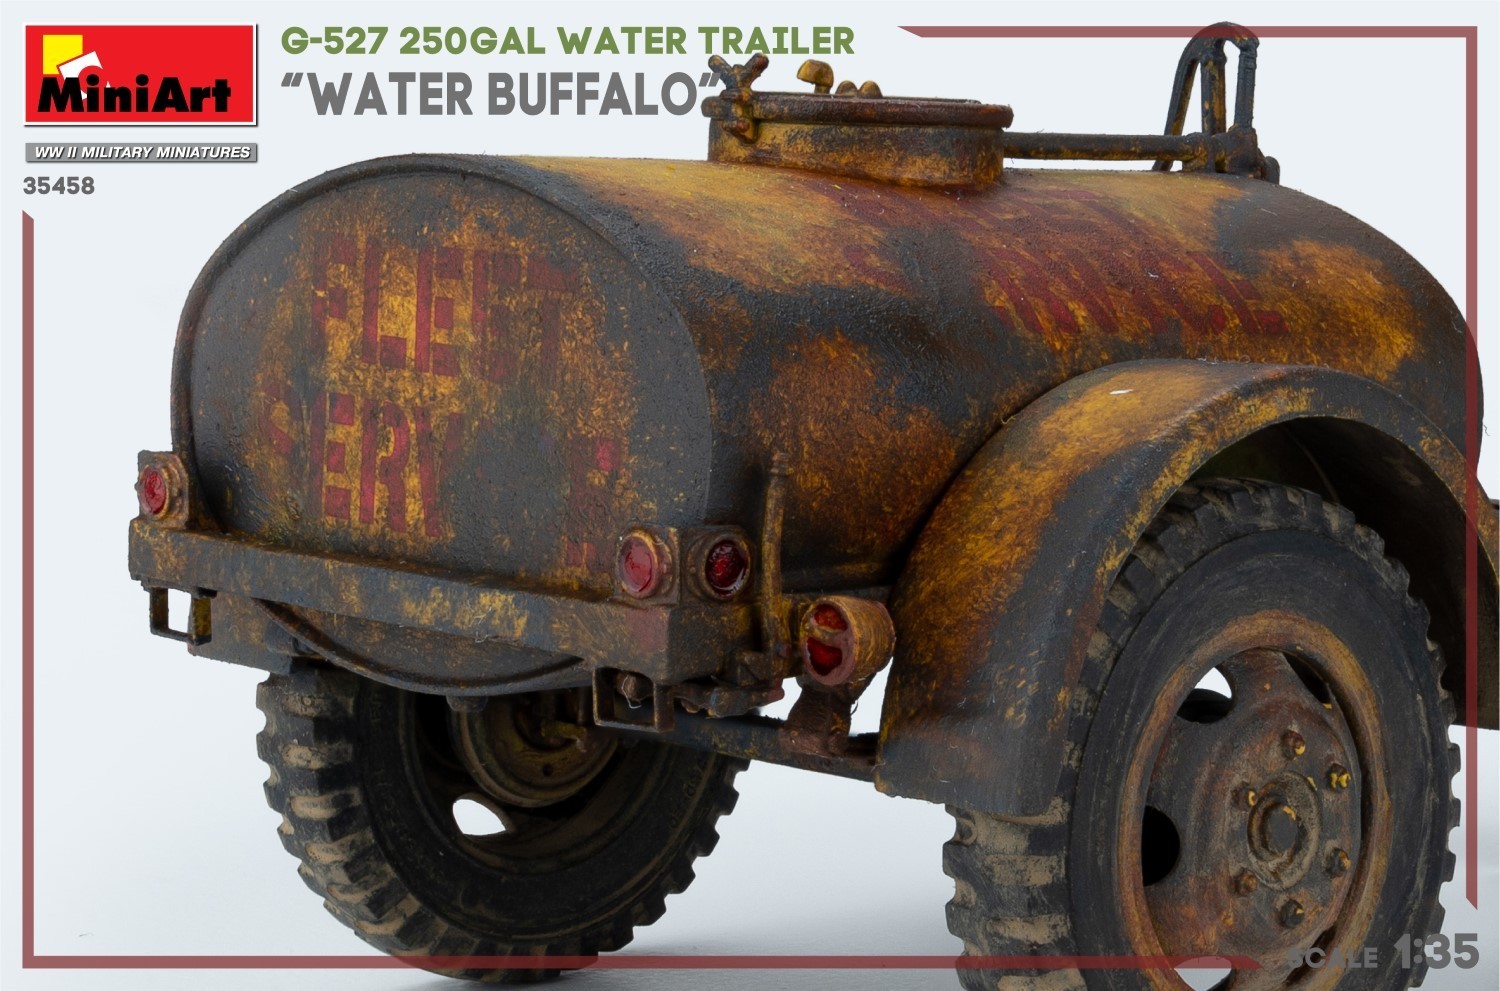 MiniArt G-527 250GAL Water Trailer “Water Buffalo” Rust Paint-10